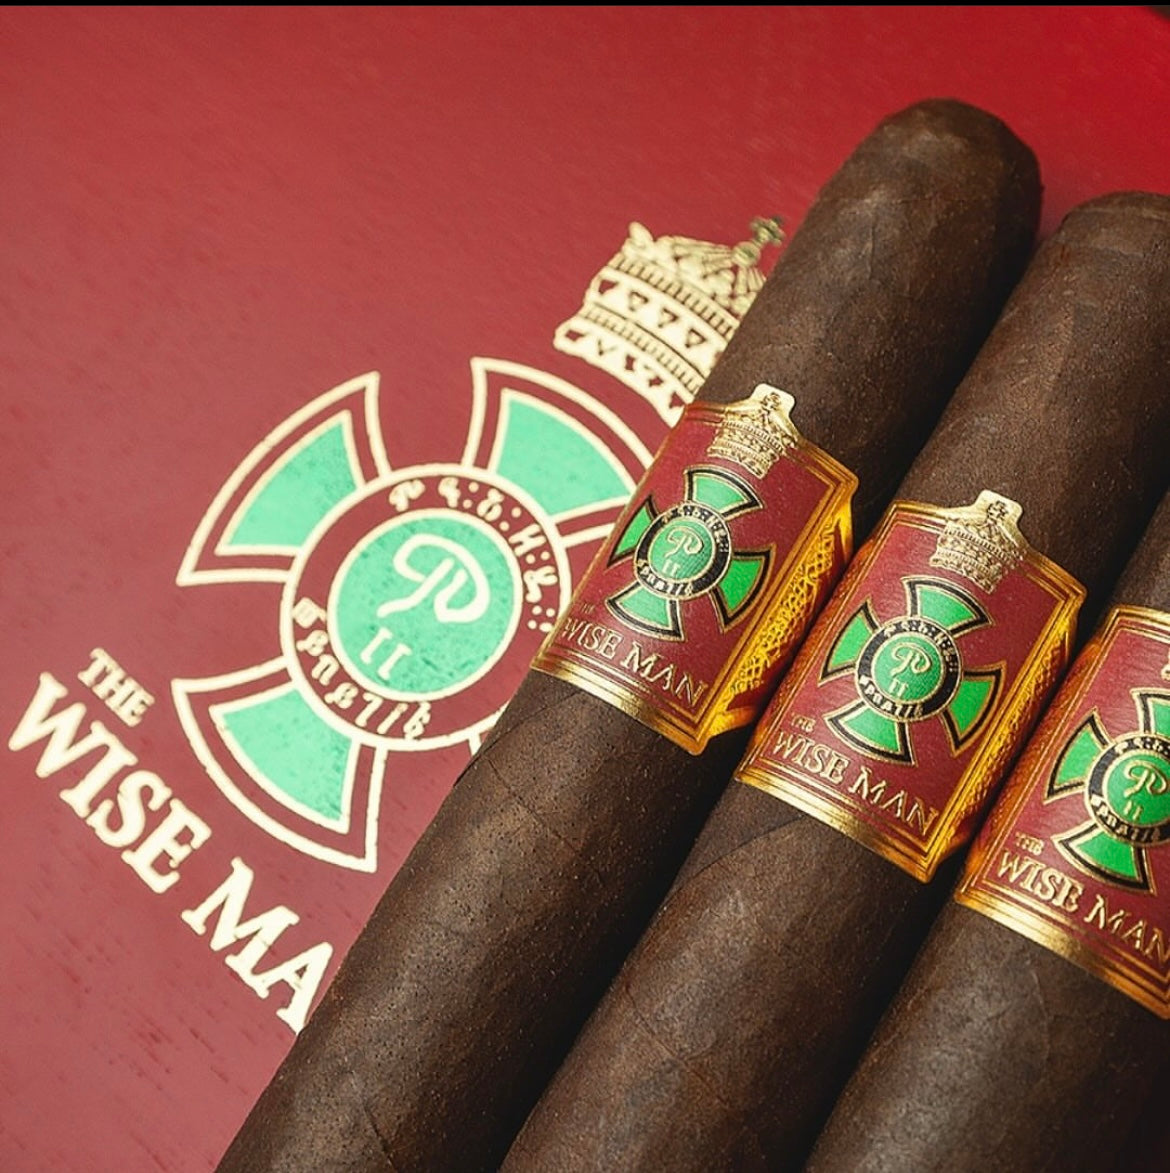 Foundation Cigars - The Wise Man Maduro Toro